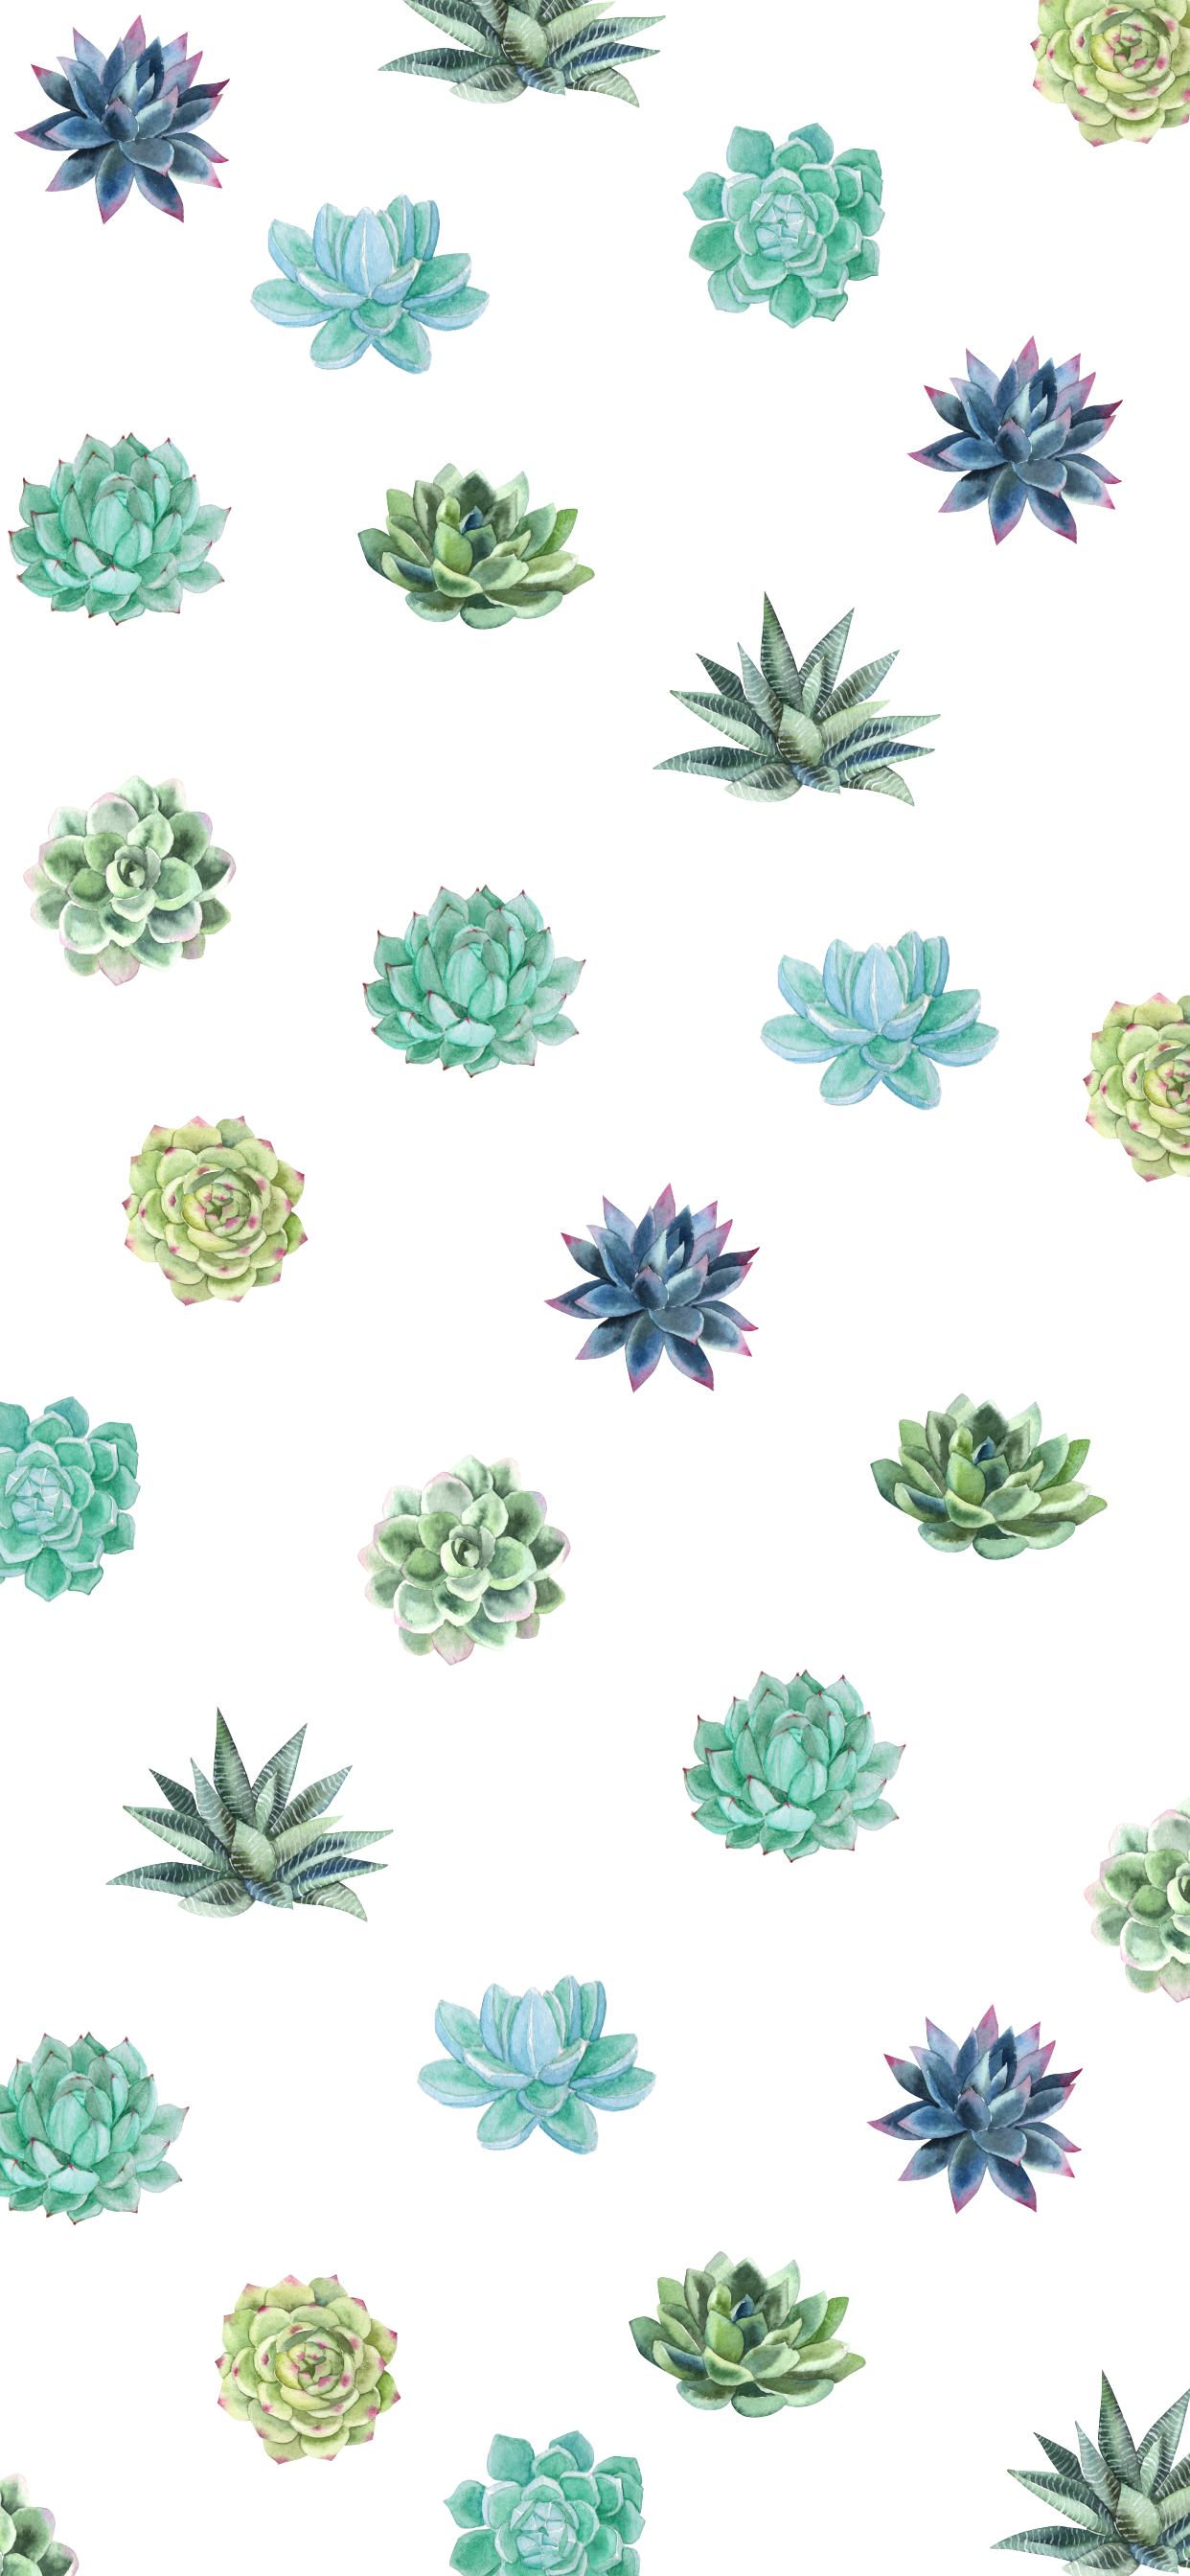 Cute Summer iPhone Wallpaper Part 2. Succulents